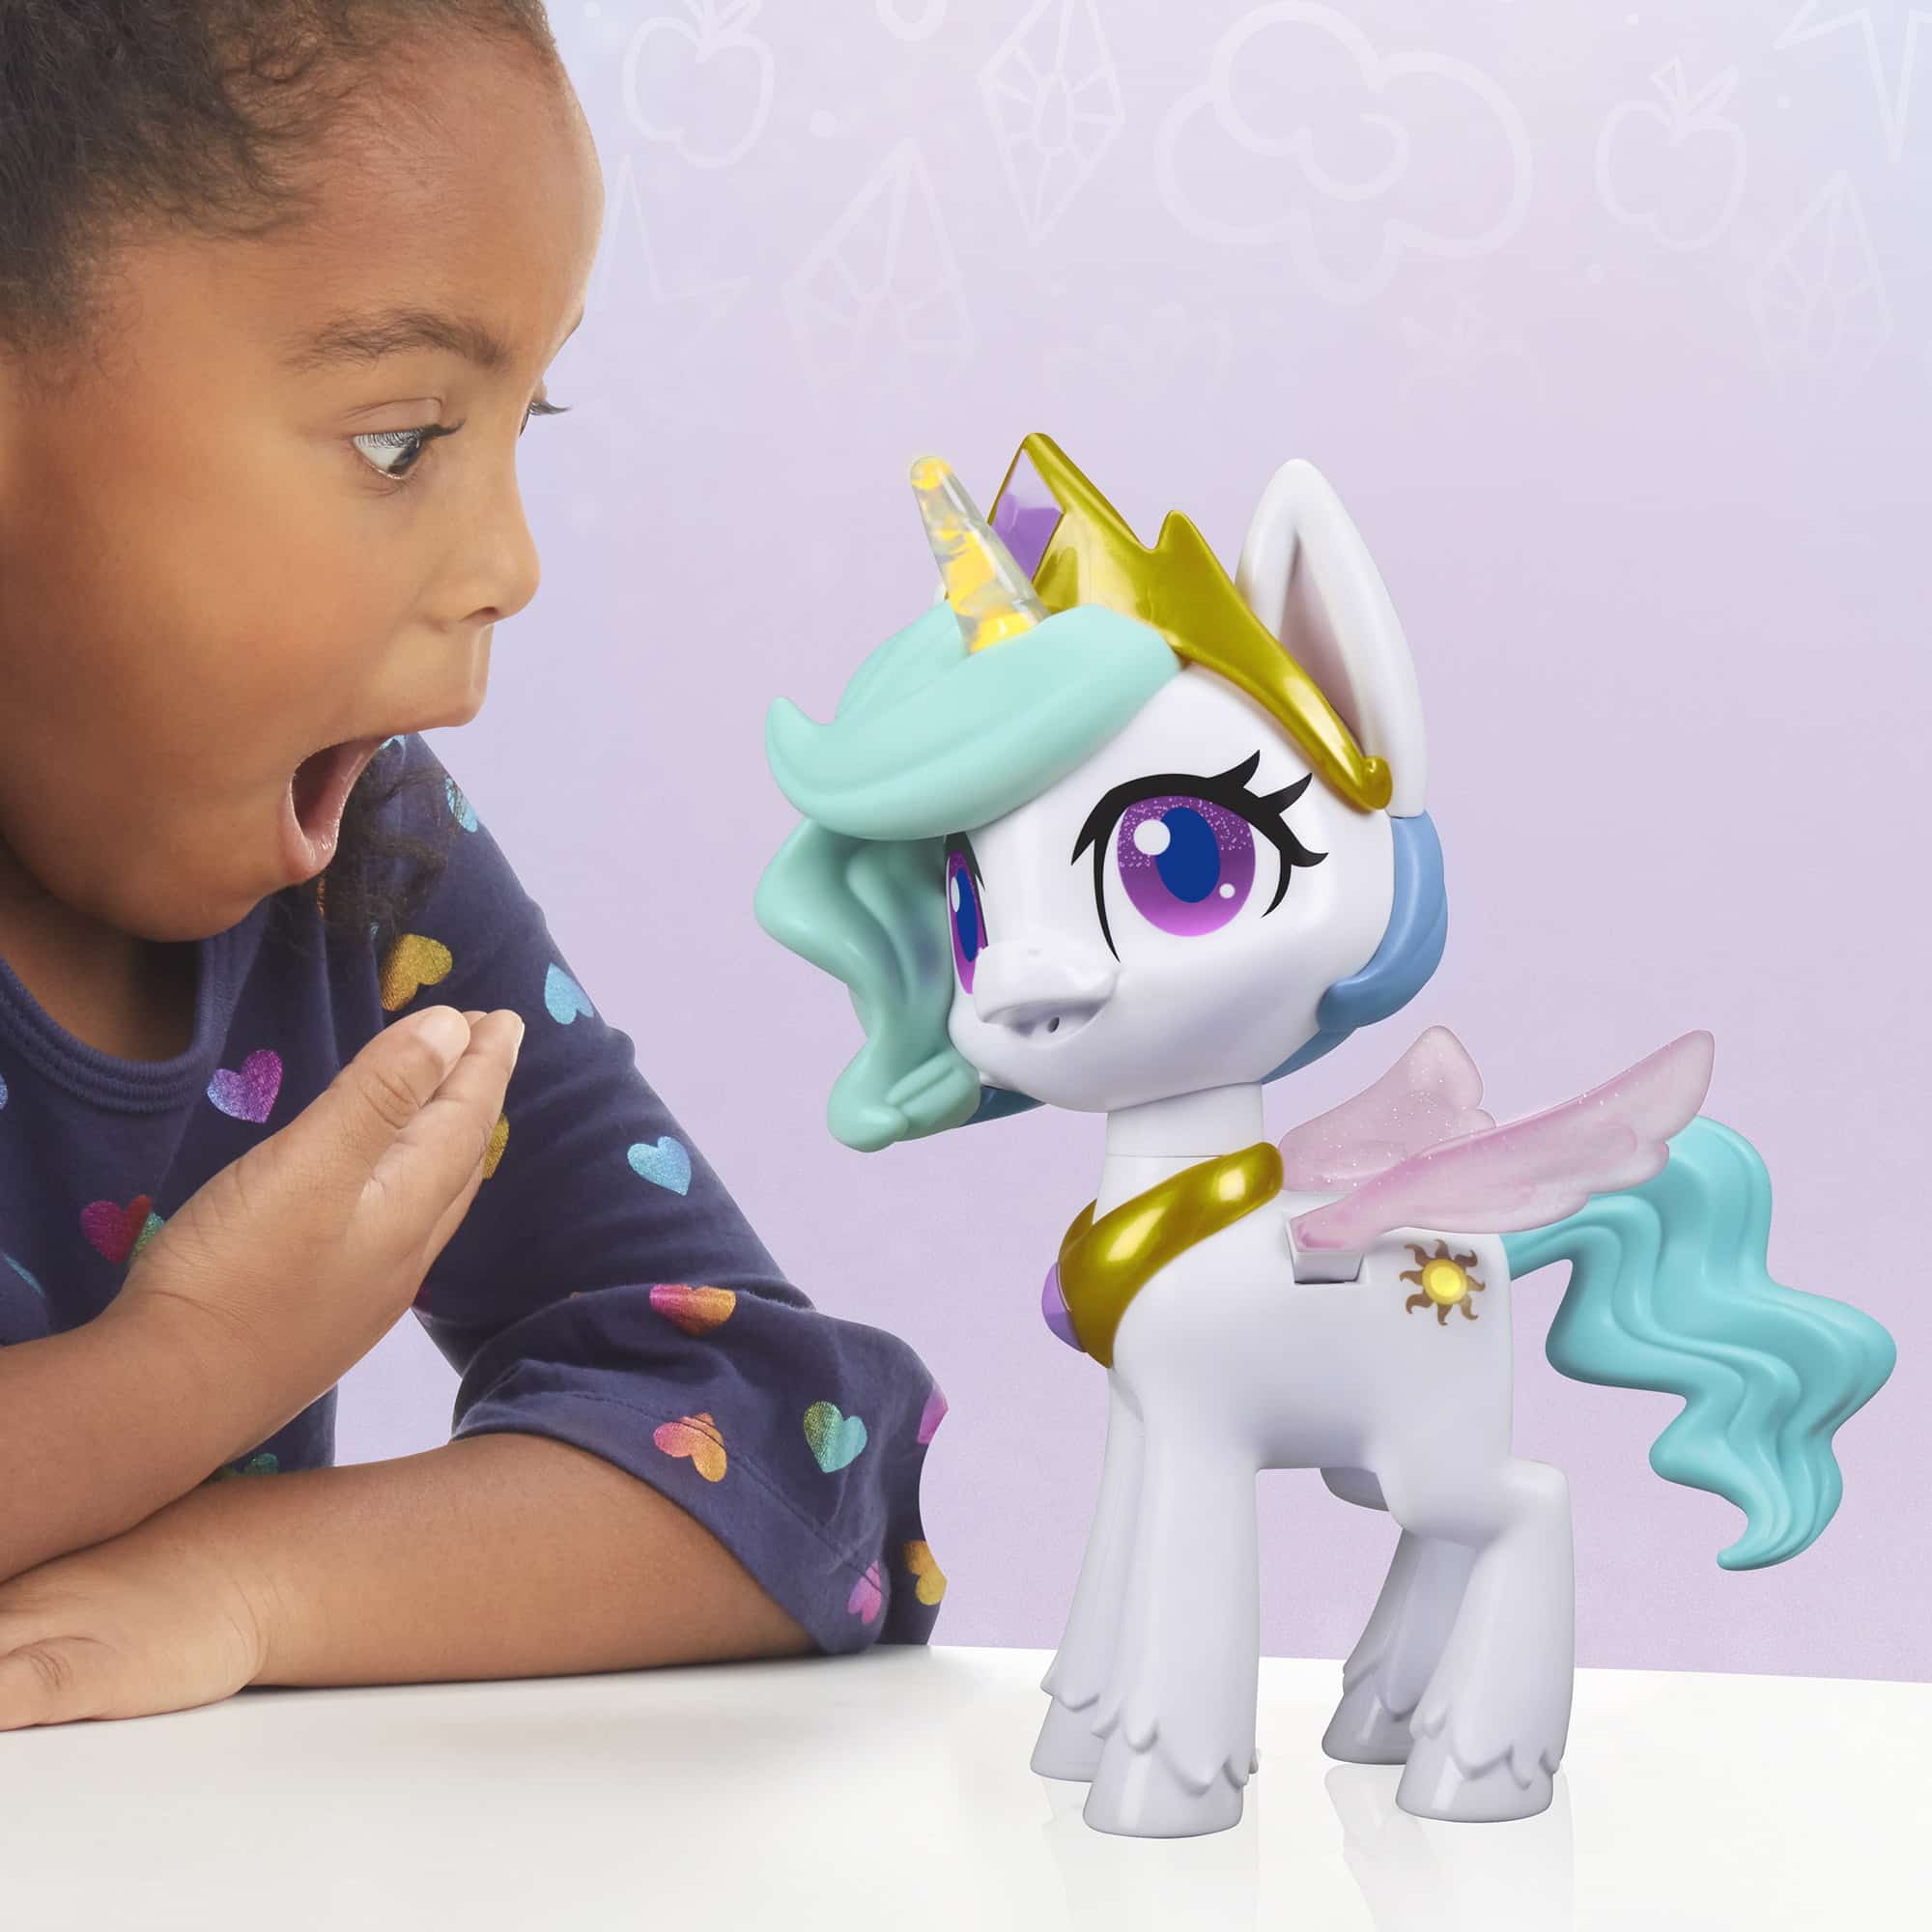 My Little Pony - Magical Kiss Unicorn